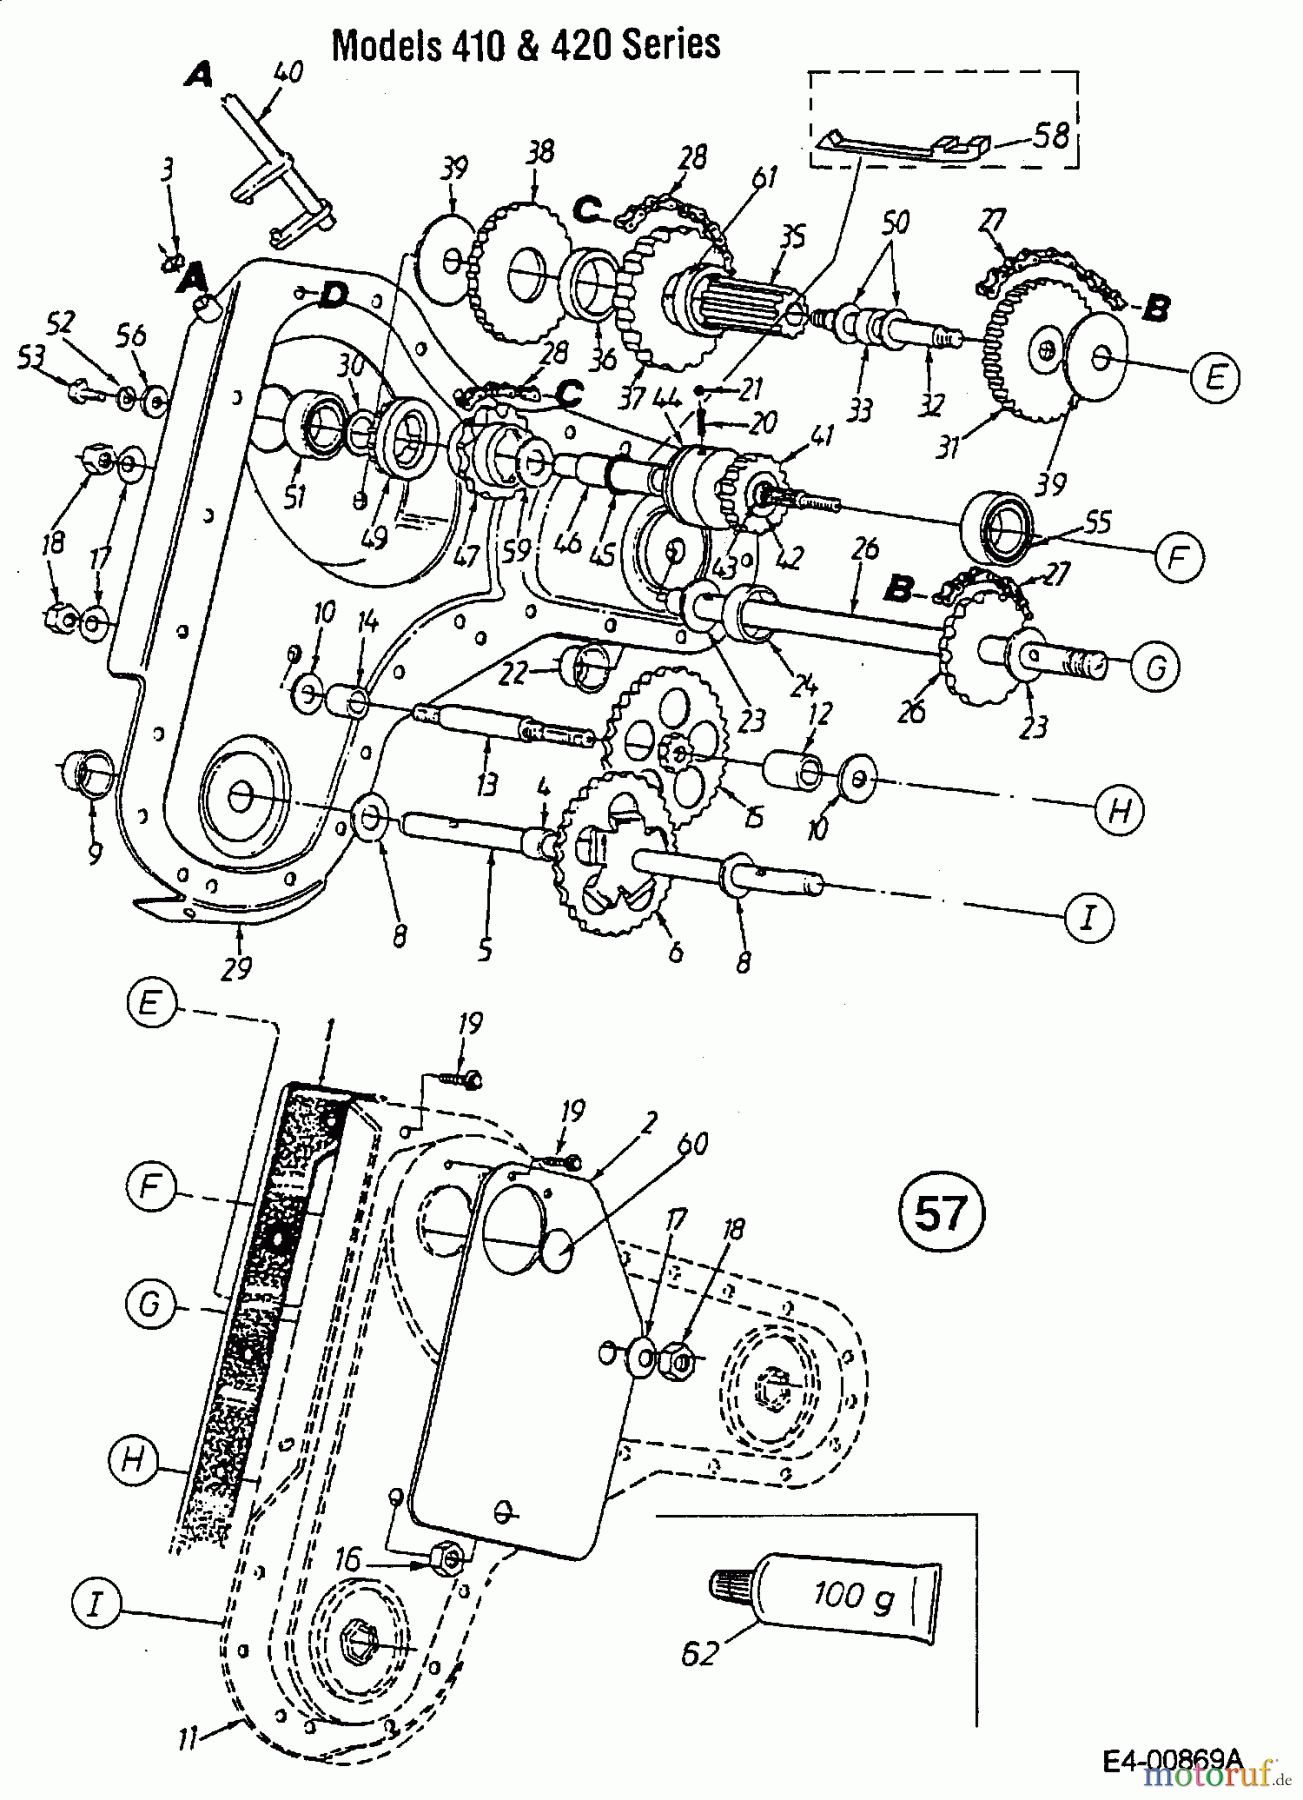  Mastercut Motorhacken T/410 21A-414A659  (2000) Getriebe